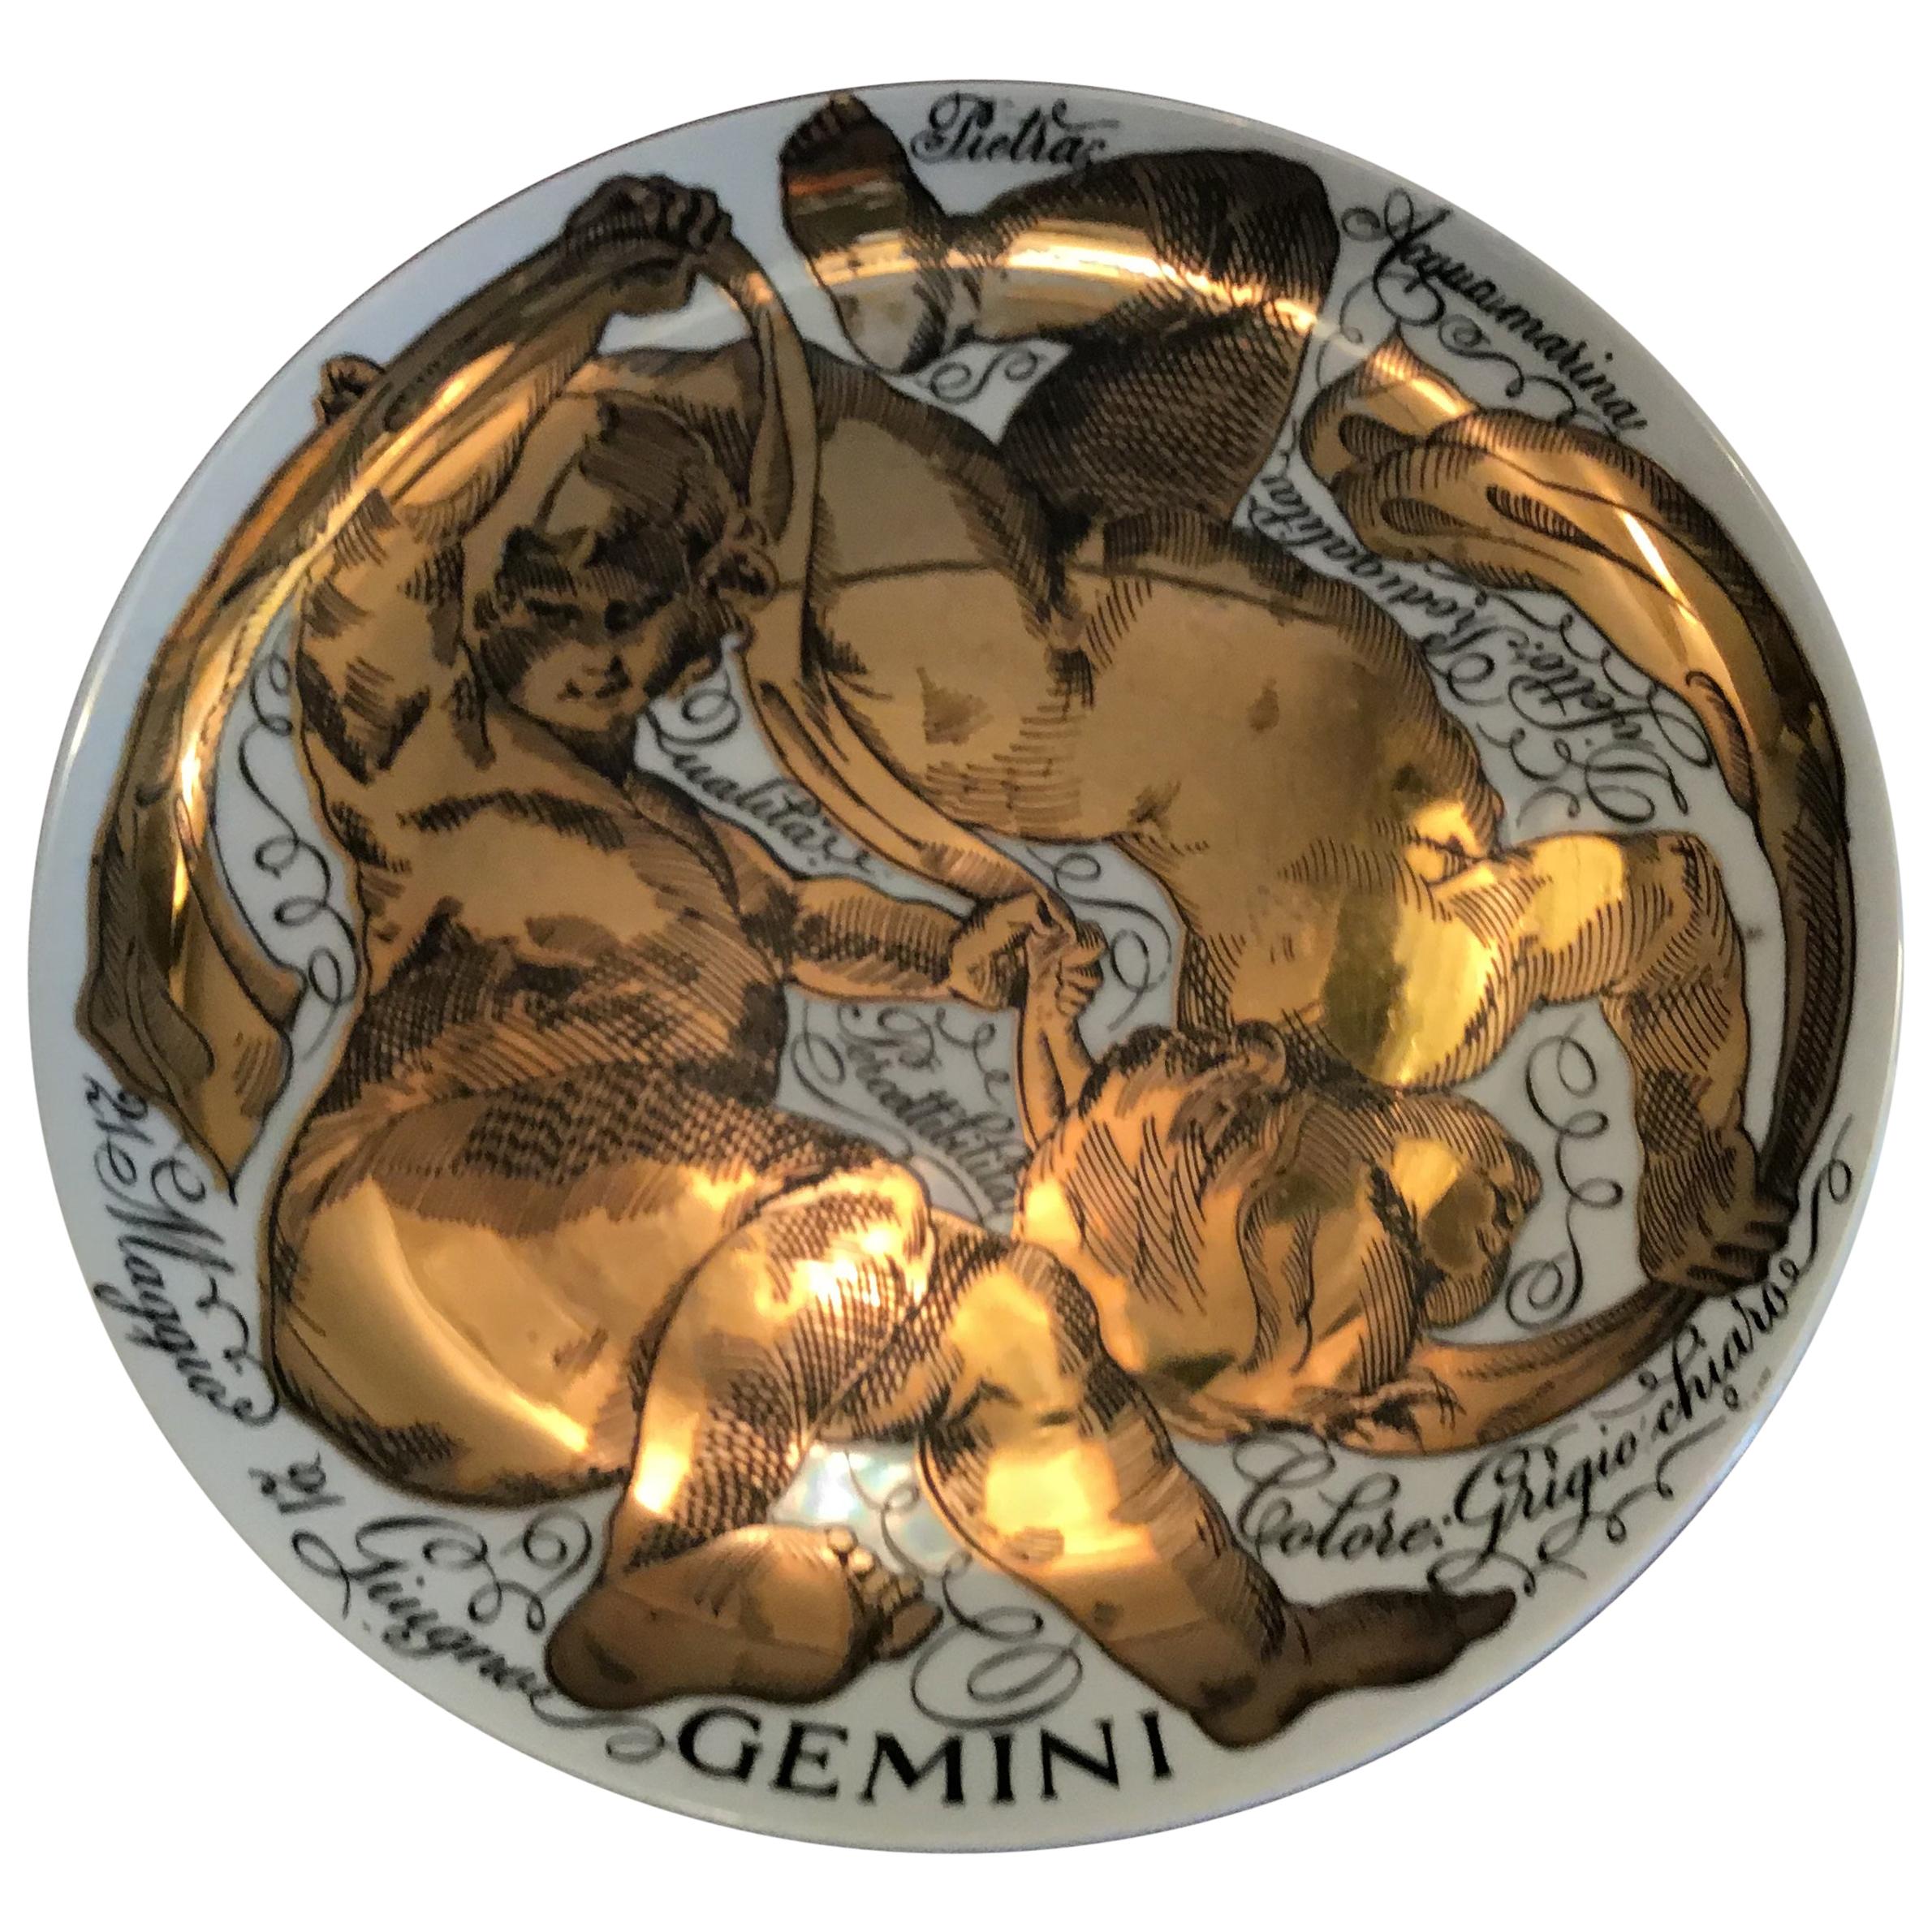 Fornasetti Plate Gemini Zodiac Porcelain, 1973, Italy